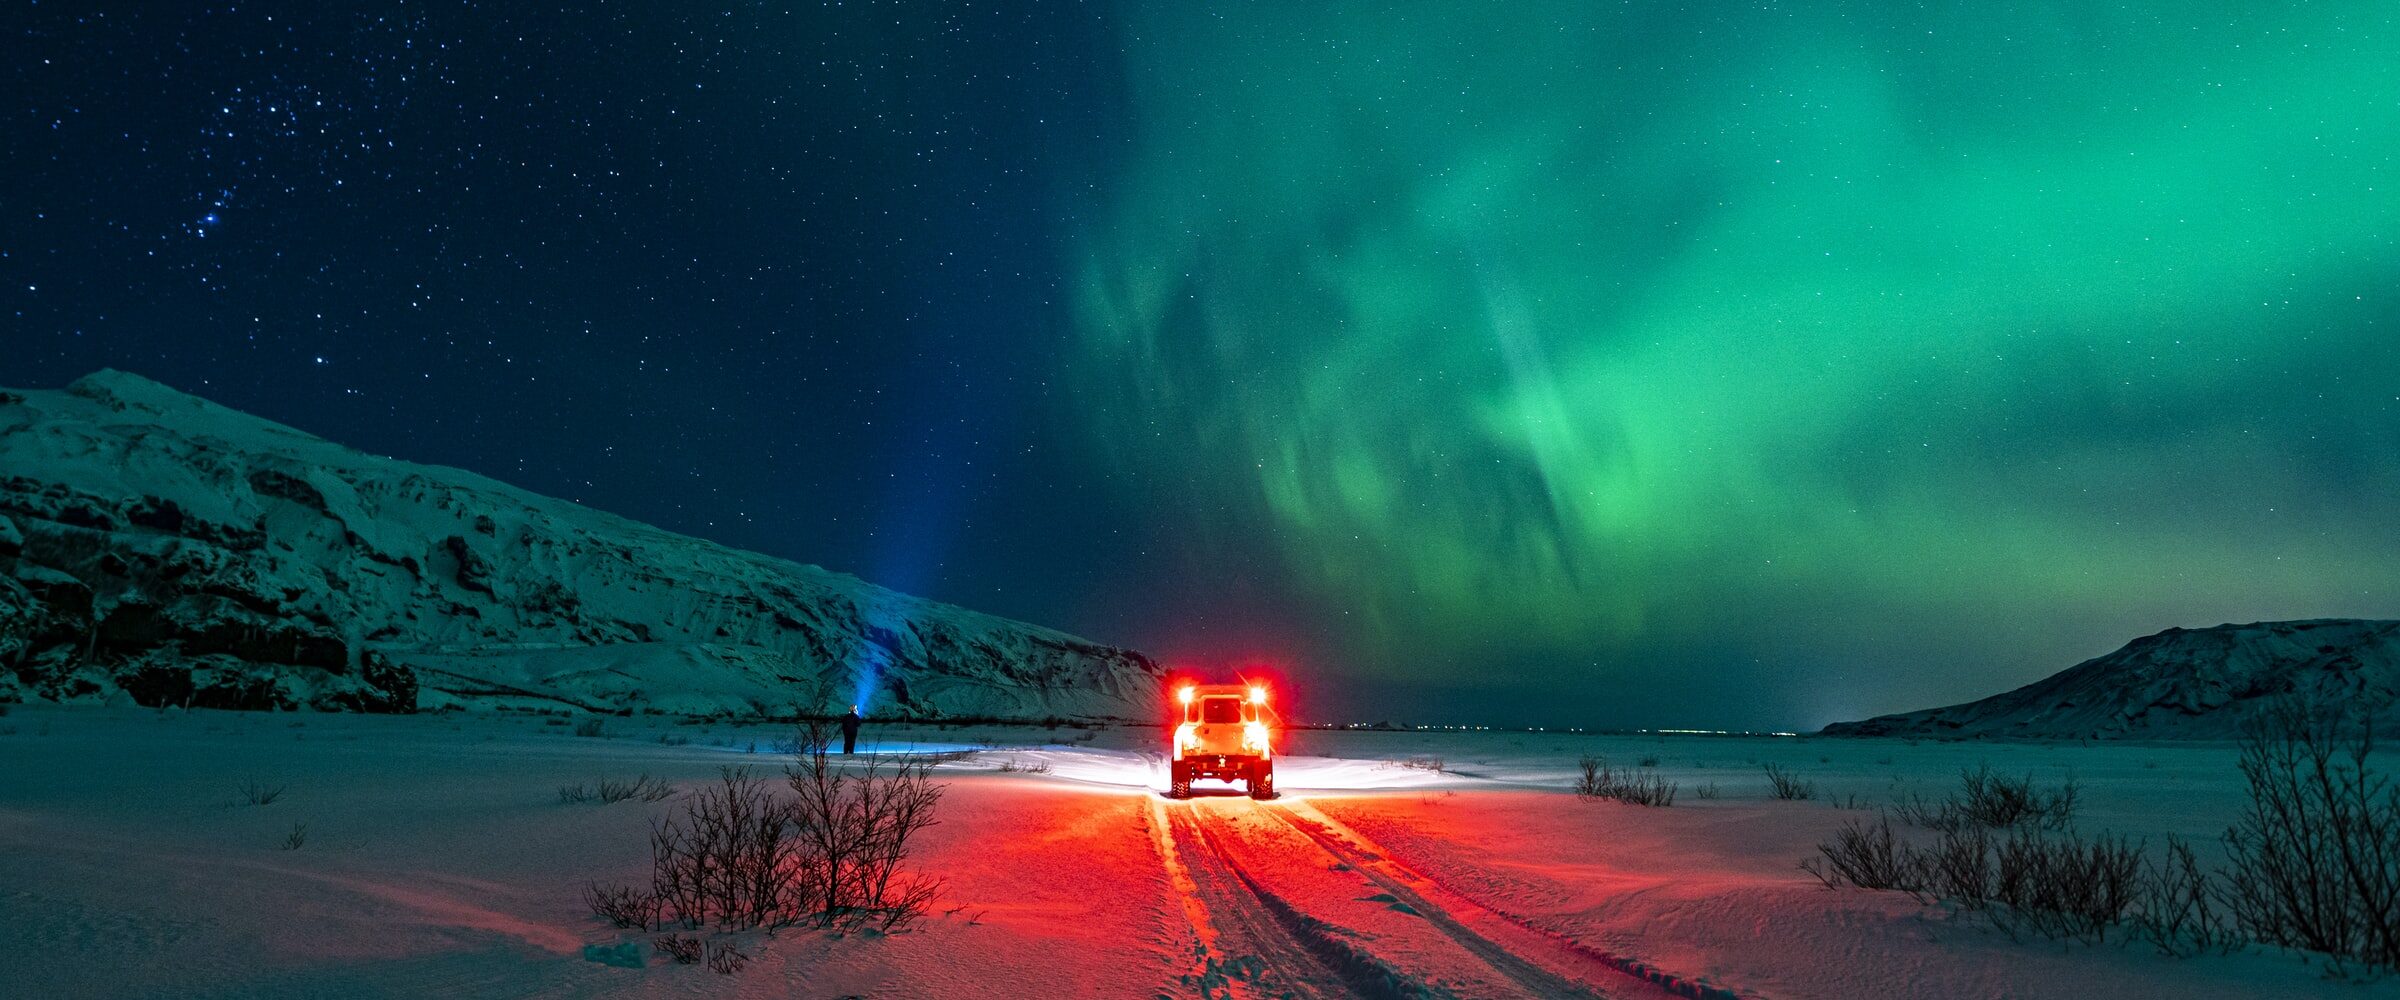 Polarna svjetlost, Aurora Borealis